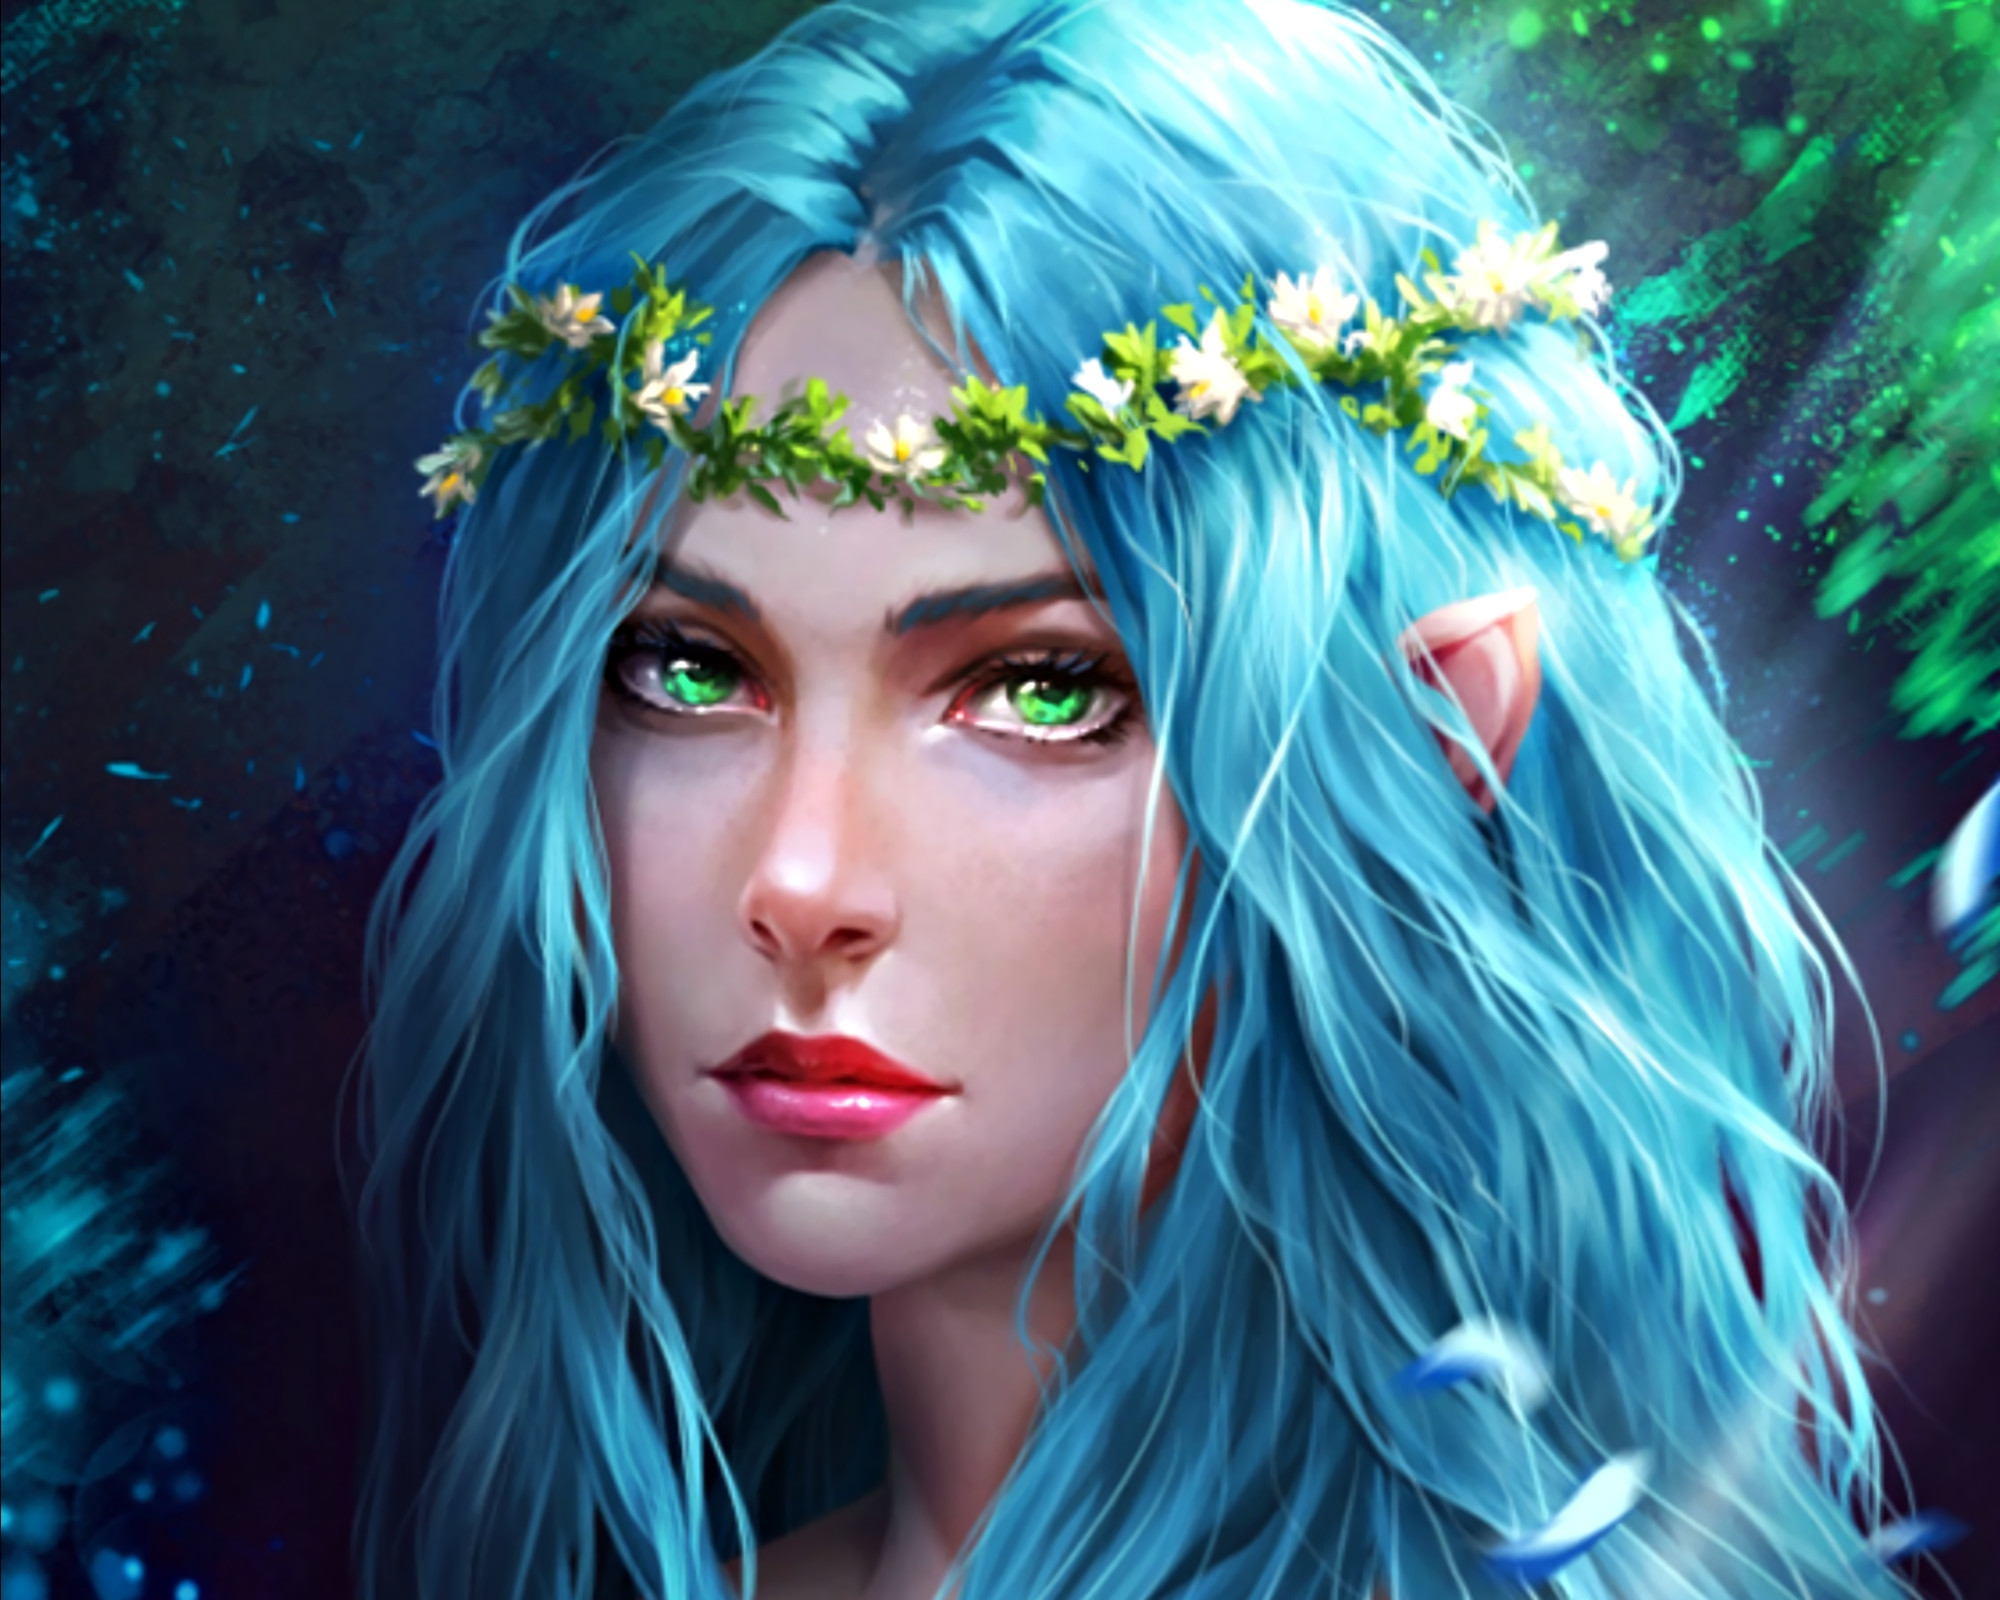 Blue-haired elf girl from "Sword Art Online" - wide 7